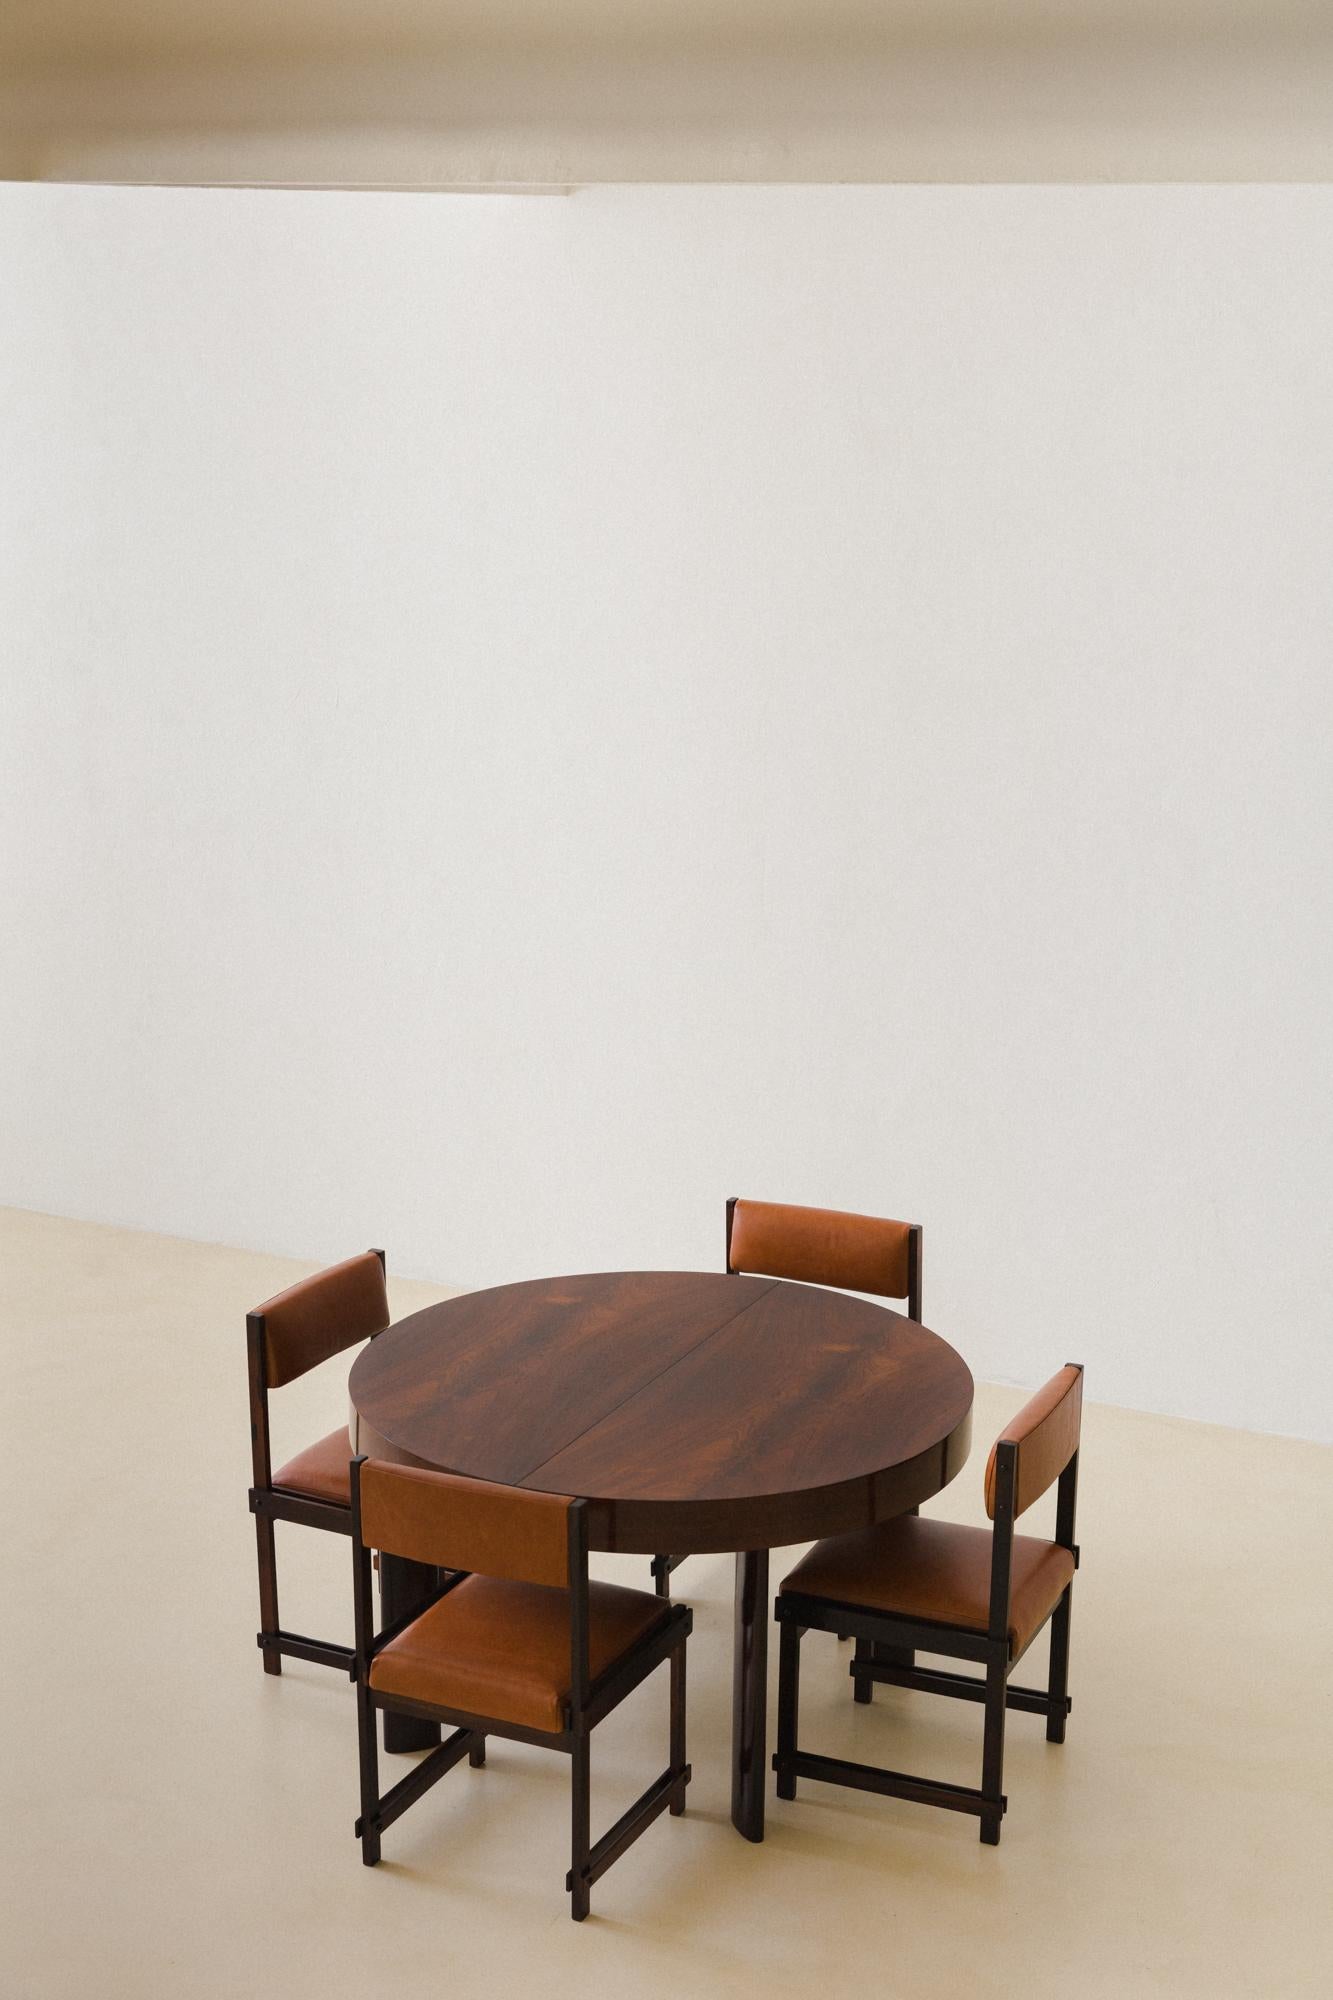 Celina Decorações, Brazilian Midcentury Dining Table in Rosewood, 1960s For Sale 9